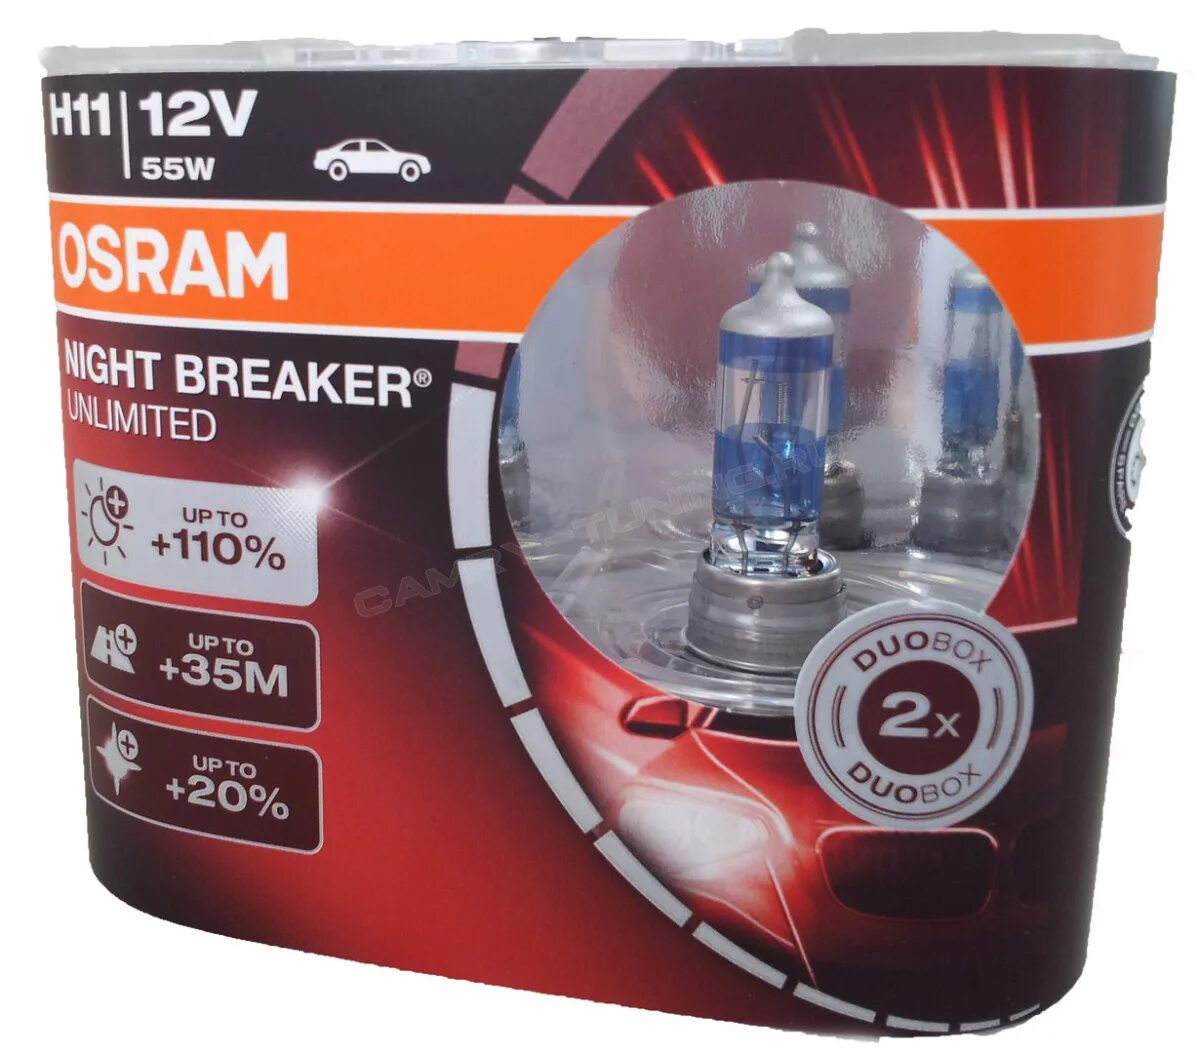 Osram h11 12v 55w. Лампа Осрам h11 Найт брекер. Osram Night Breaker Unlimited h11. Osram h11 +150. Лампа н11 Осрам стандарт.